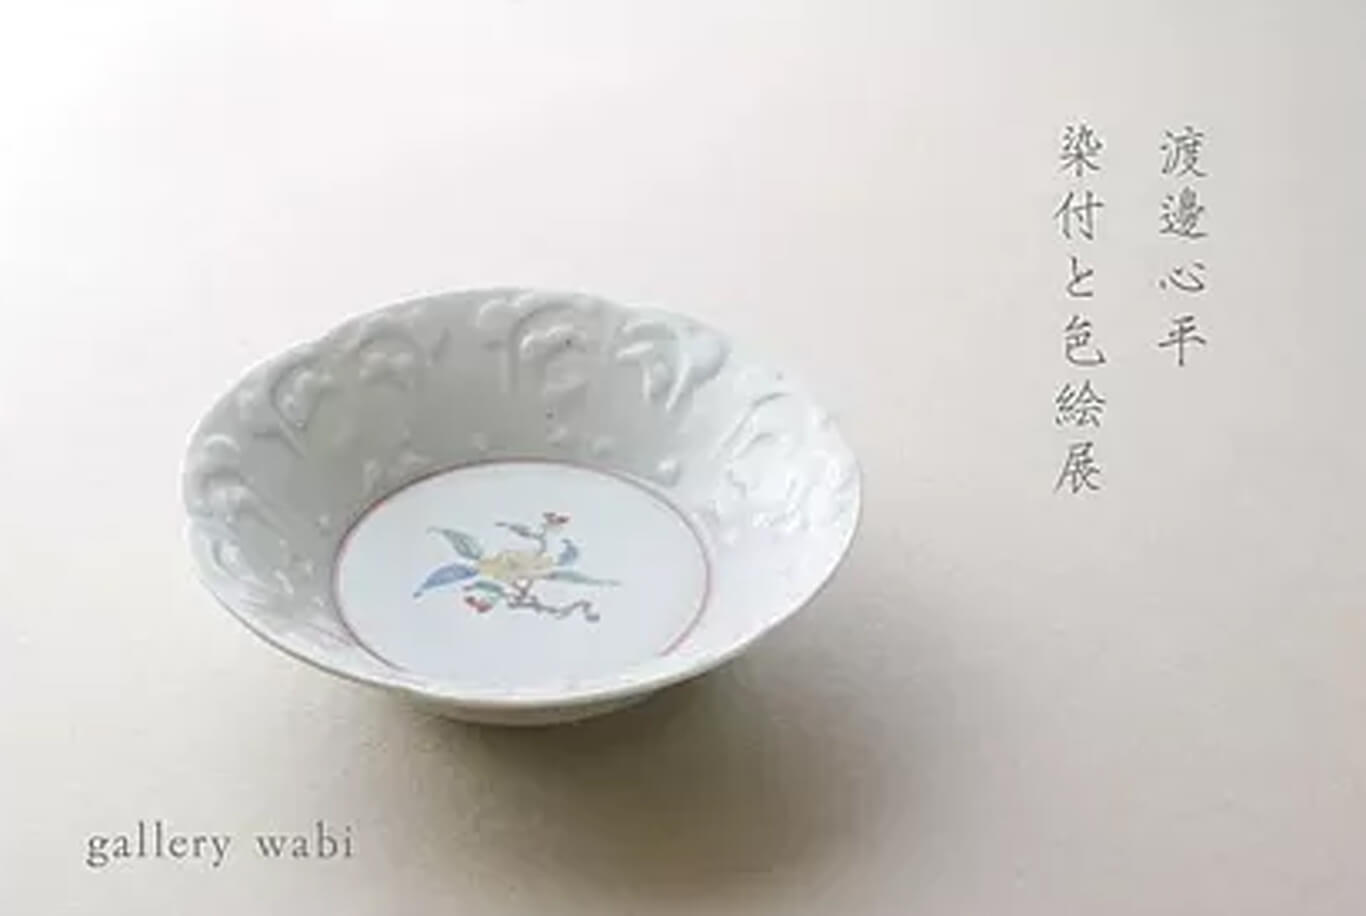 wabi-201906-渡邊心平-展覧会